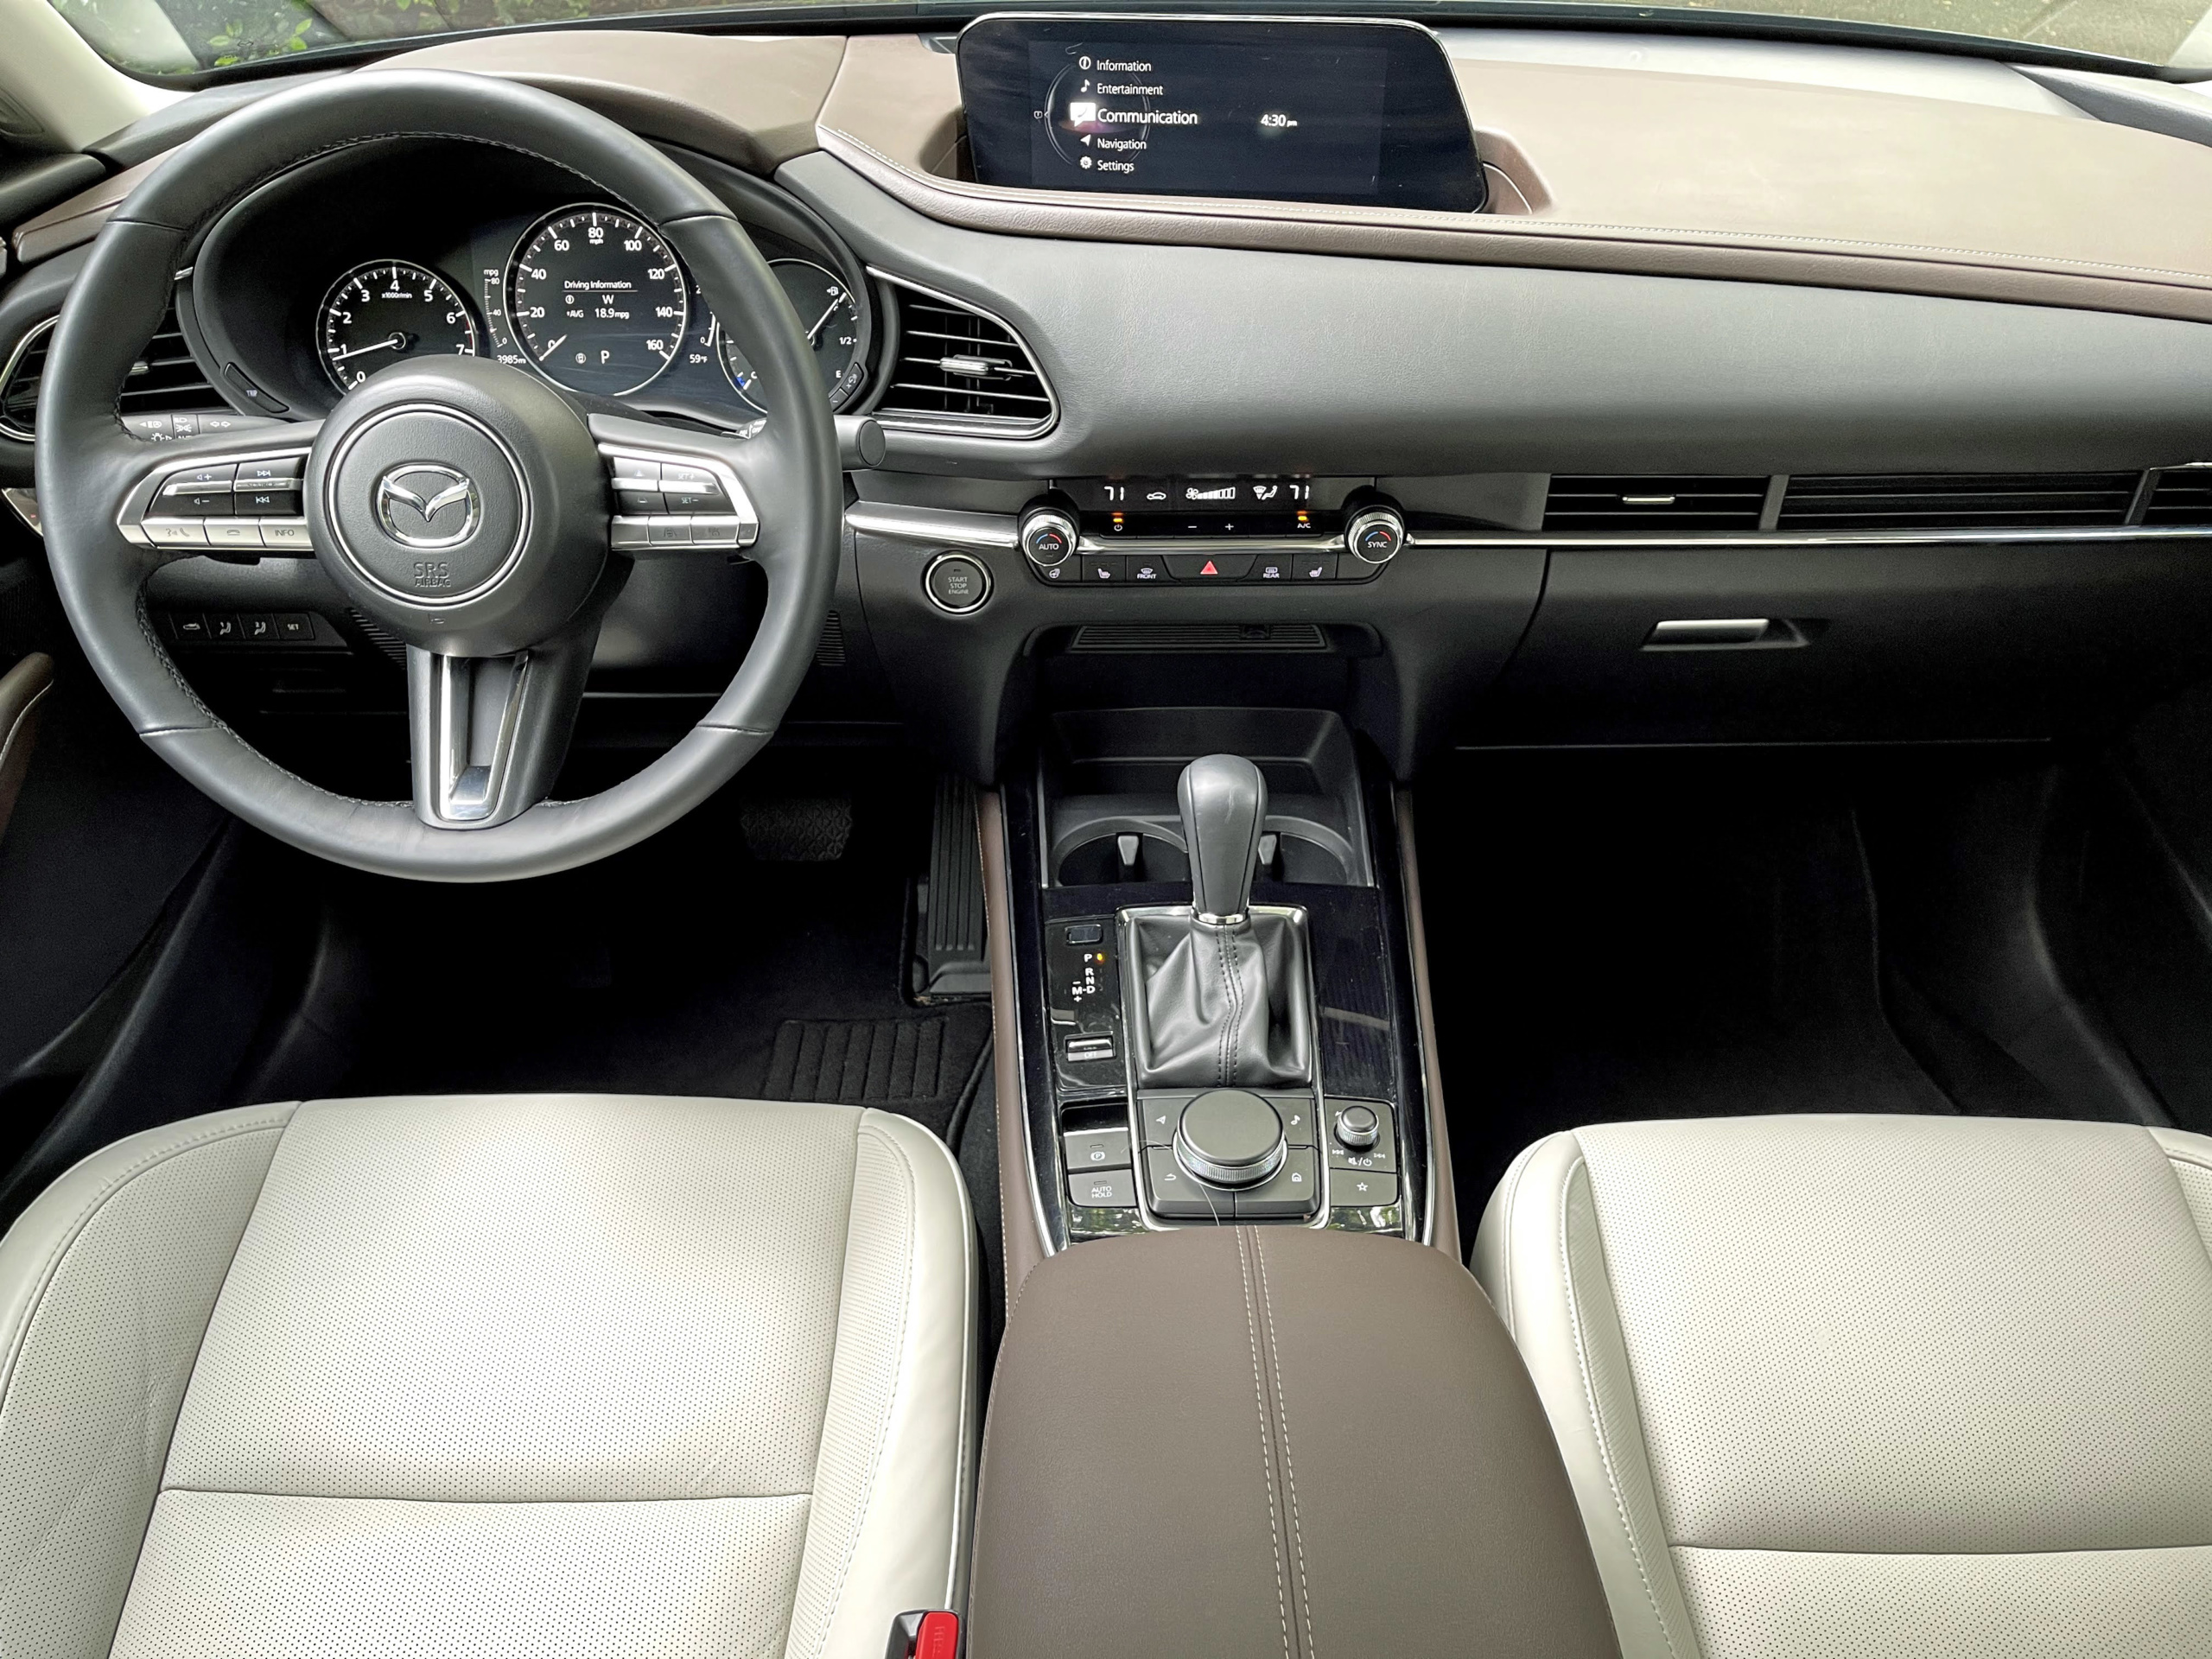 2021 Mazda CX-30 Interior Review  An affordable, premium heavyweight -  Autoblog